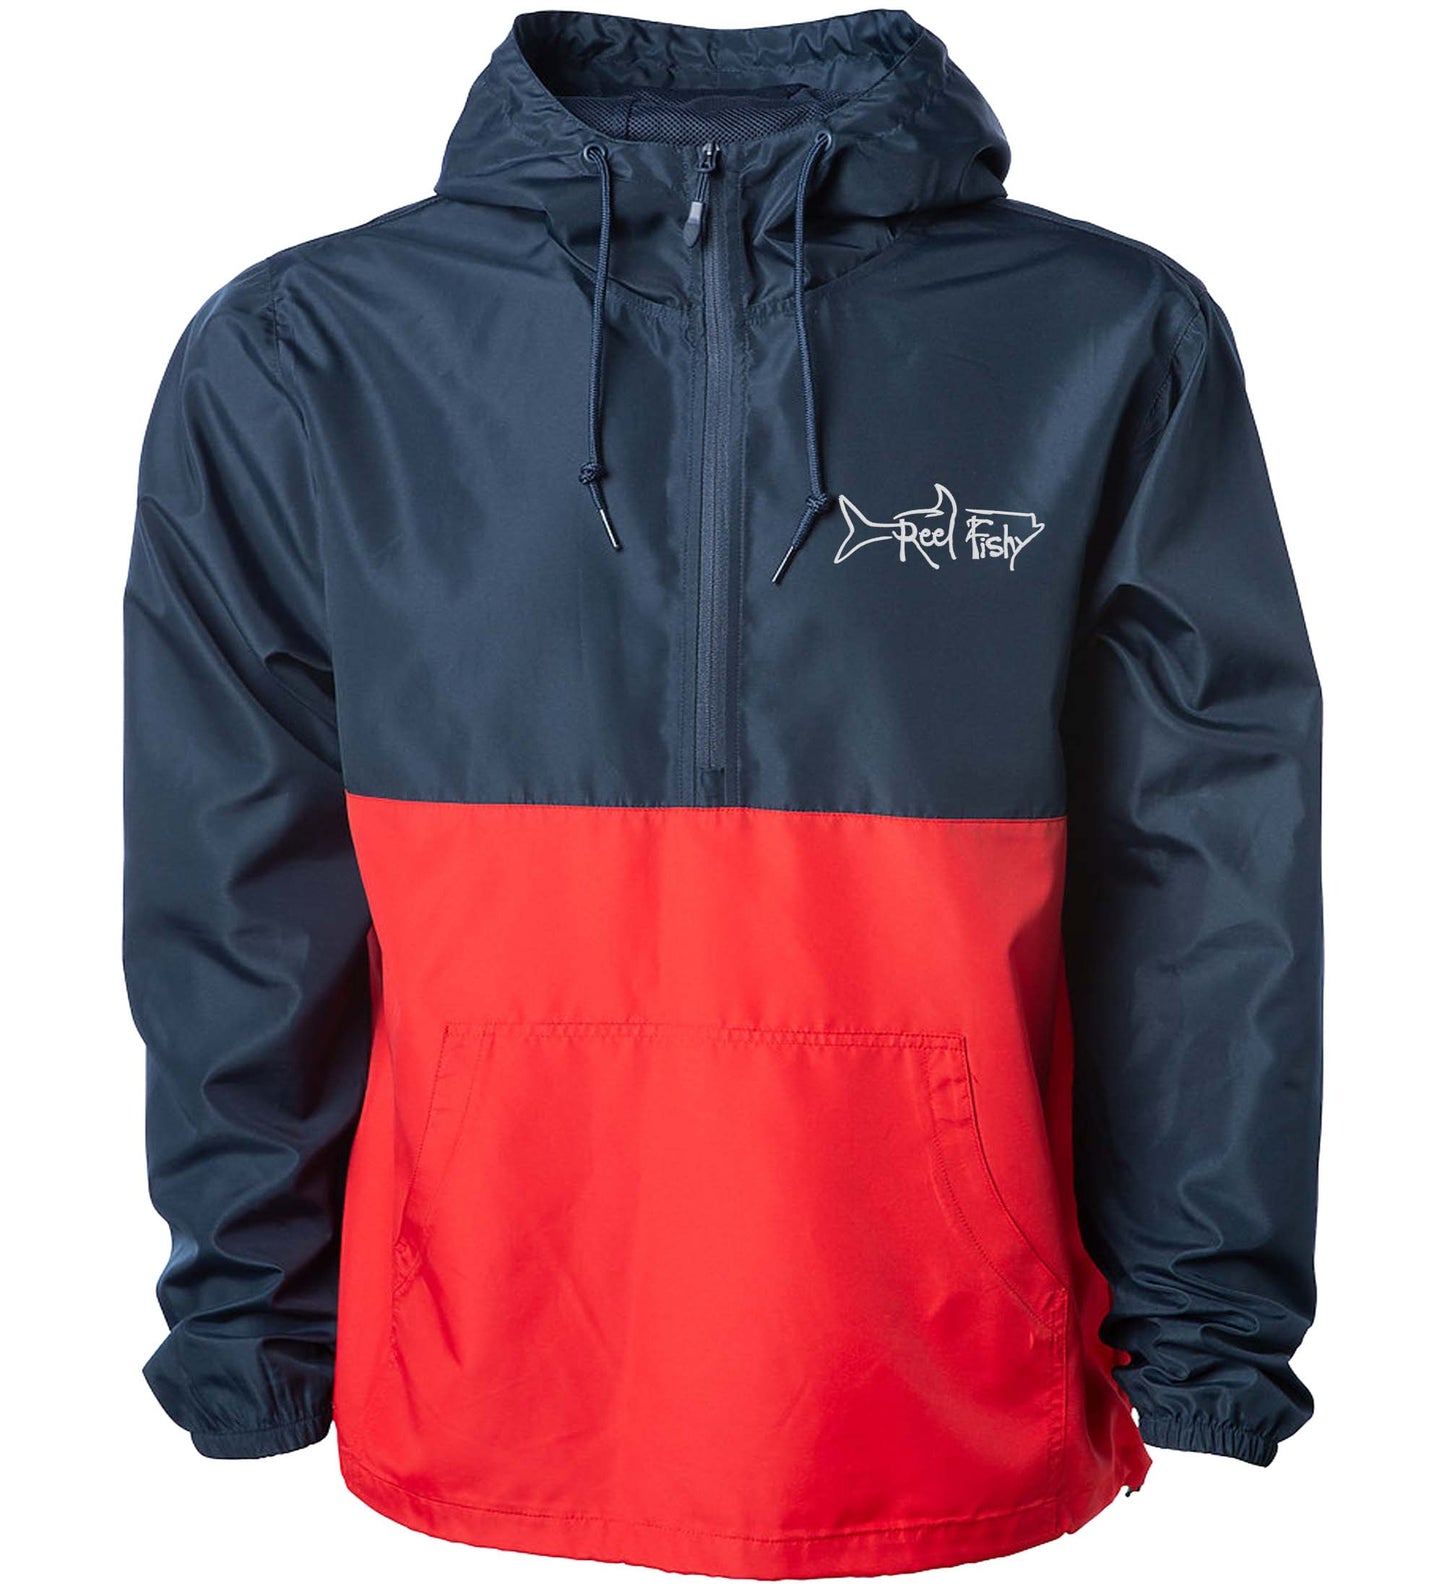 1/2 Zip Pullover Jacket in Navy/Red color - Reel Fishy Apparel